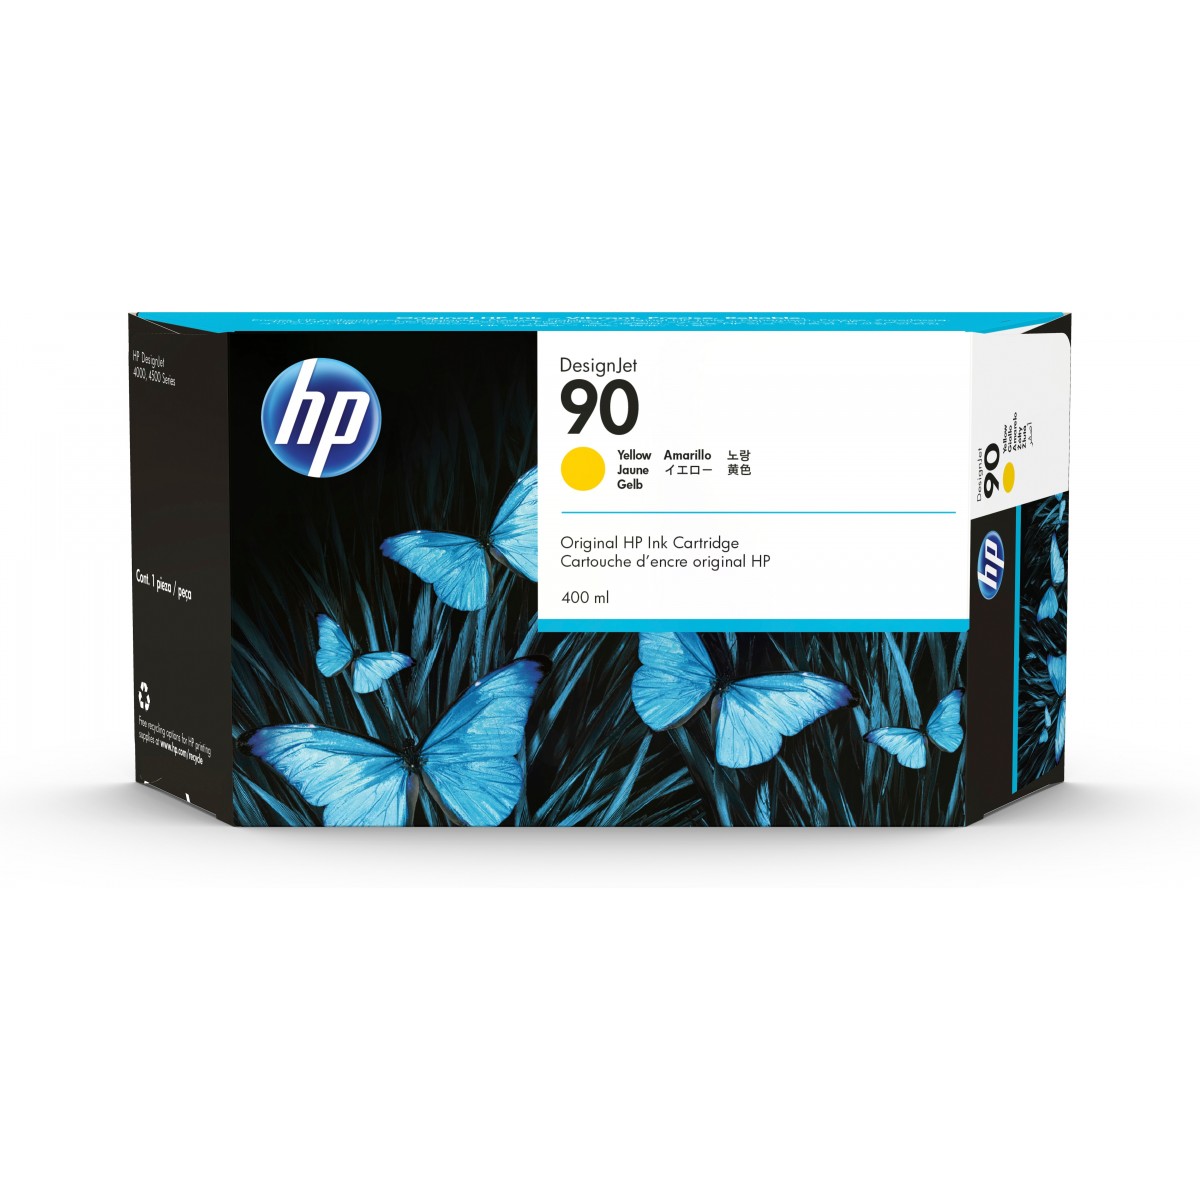 HP 90 - Original - Dye-based ink - Yellow - HP - Multi pack - HP Designjet 4000 - 4500